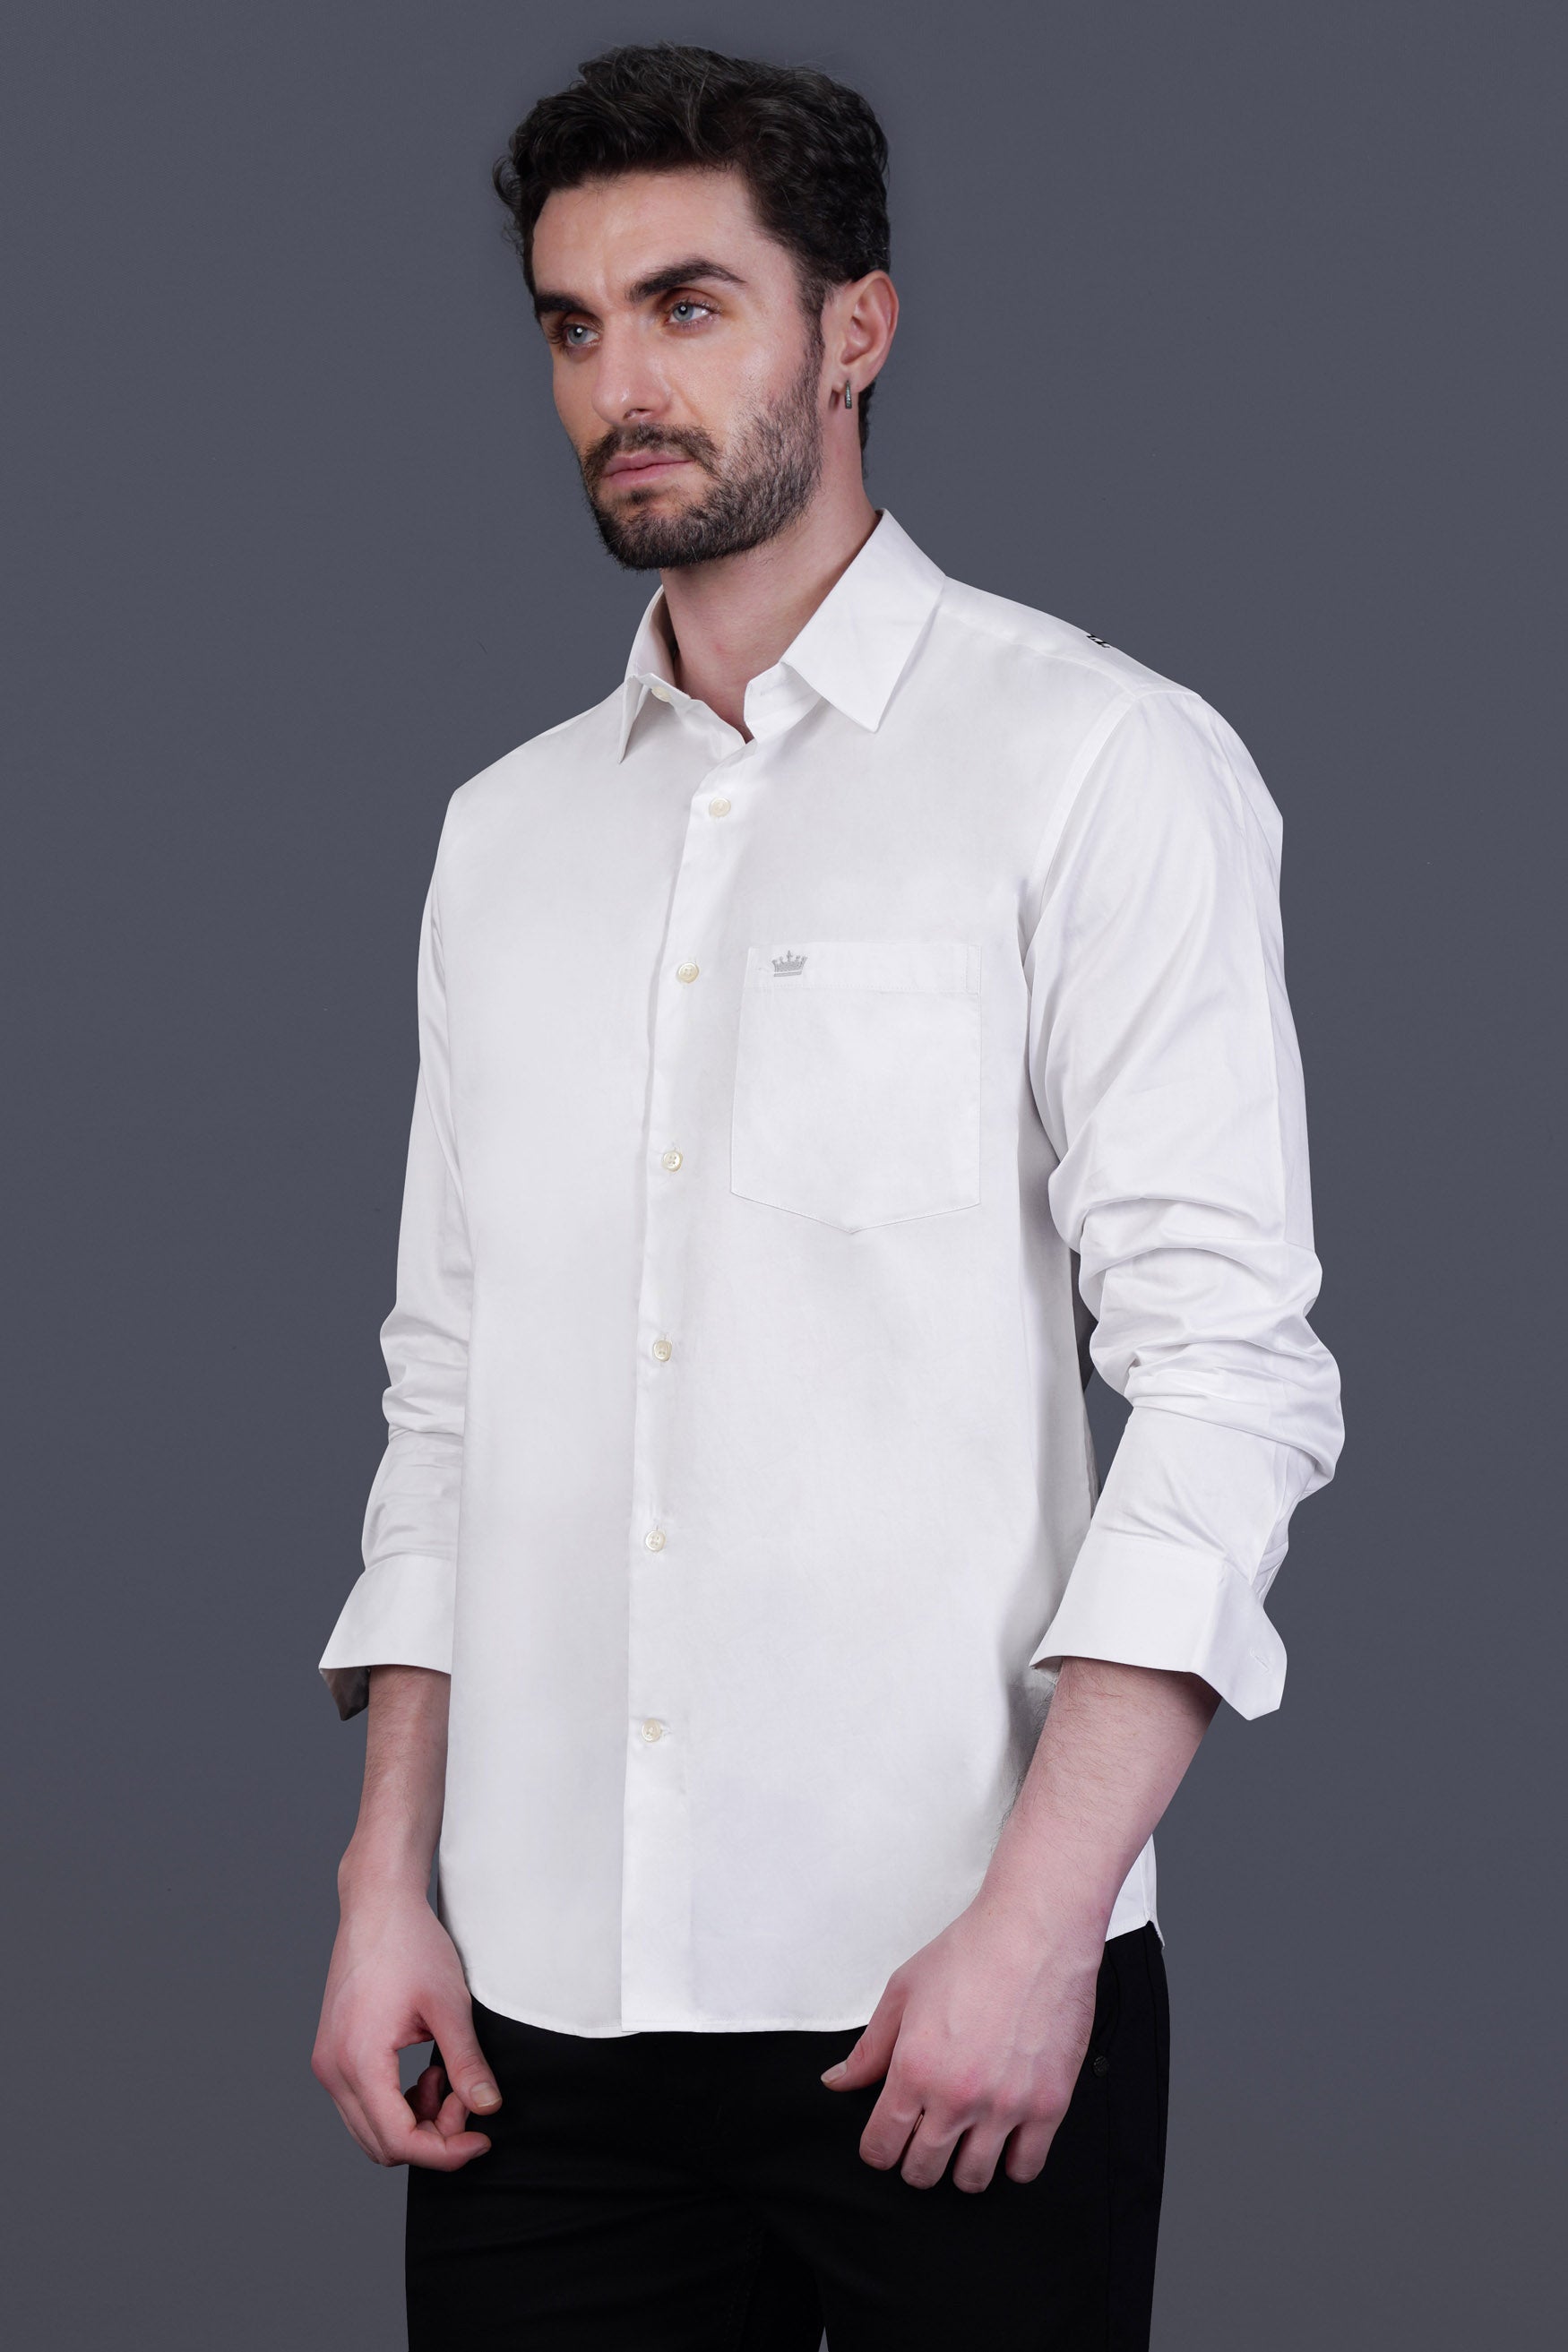 Bright White The Real Man Quote Embroidered Premium Cotton Designer Shirt